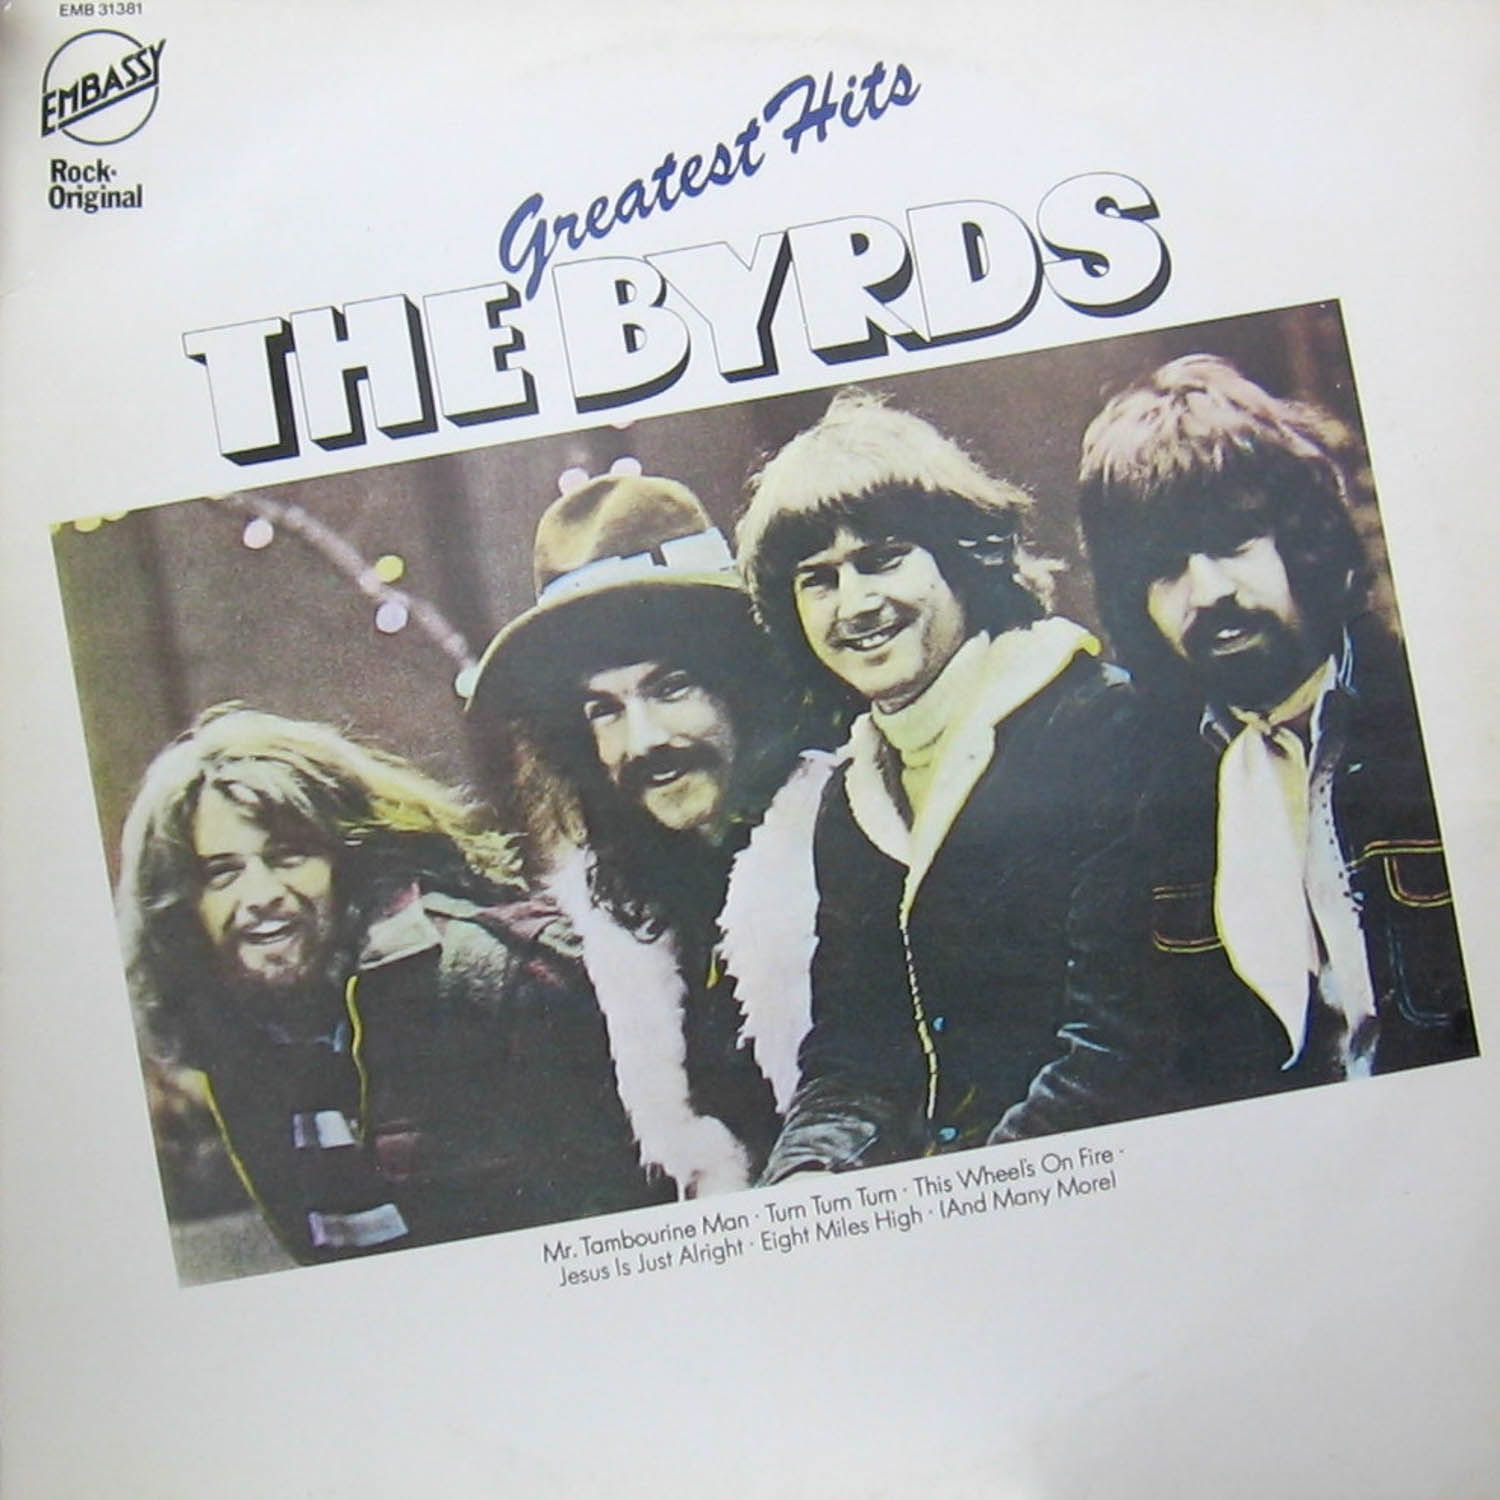 The Byrds  Greatest Hits (EMB 31381)  *LP 12'' (Vinyl)*. 